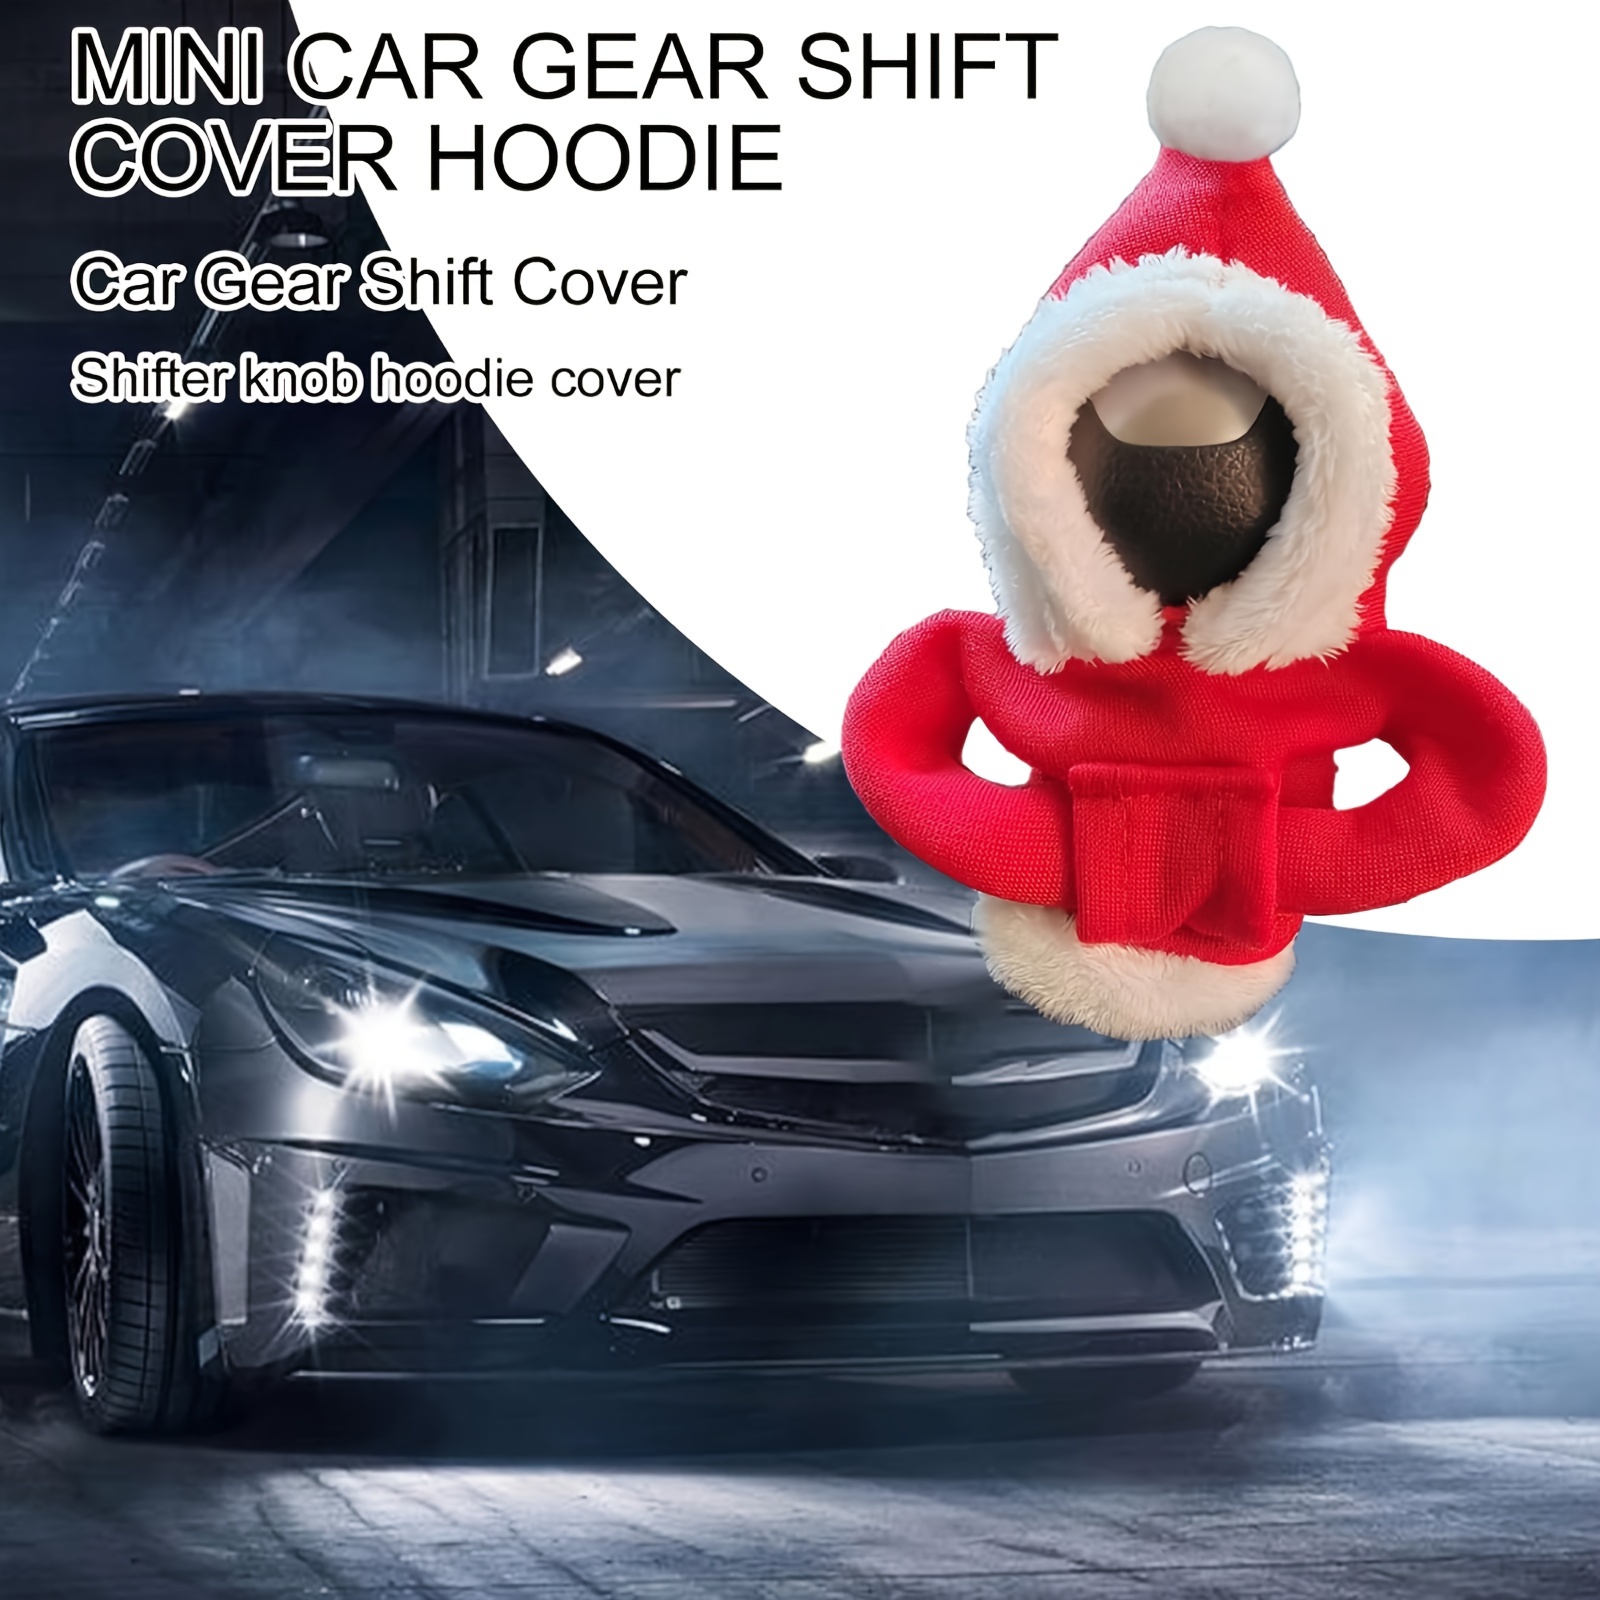 Funny Car Gear Shift Cover Mini Hoodie Gear Shift Cover Car Shift